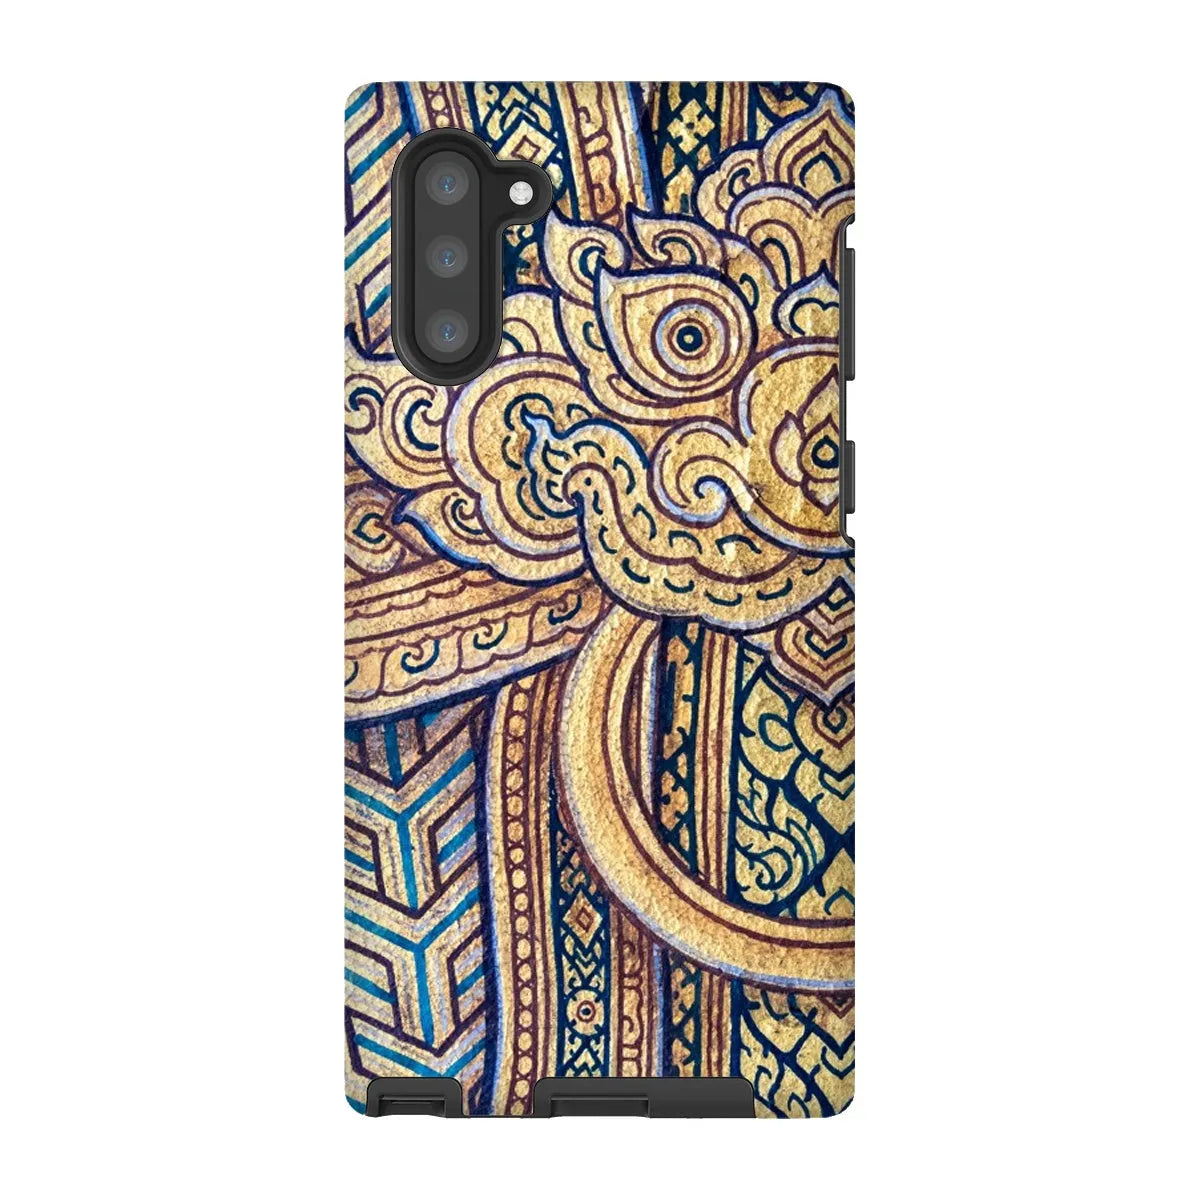 Man’s Best Friend - Thai Aesthetic Art Phone Case - Samsung Galaxy Note 10 / Matte - Mobile Phone Cases - Aesthetic Art